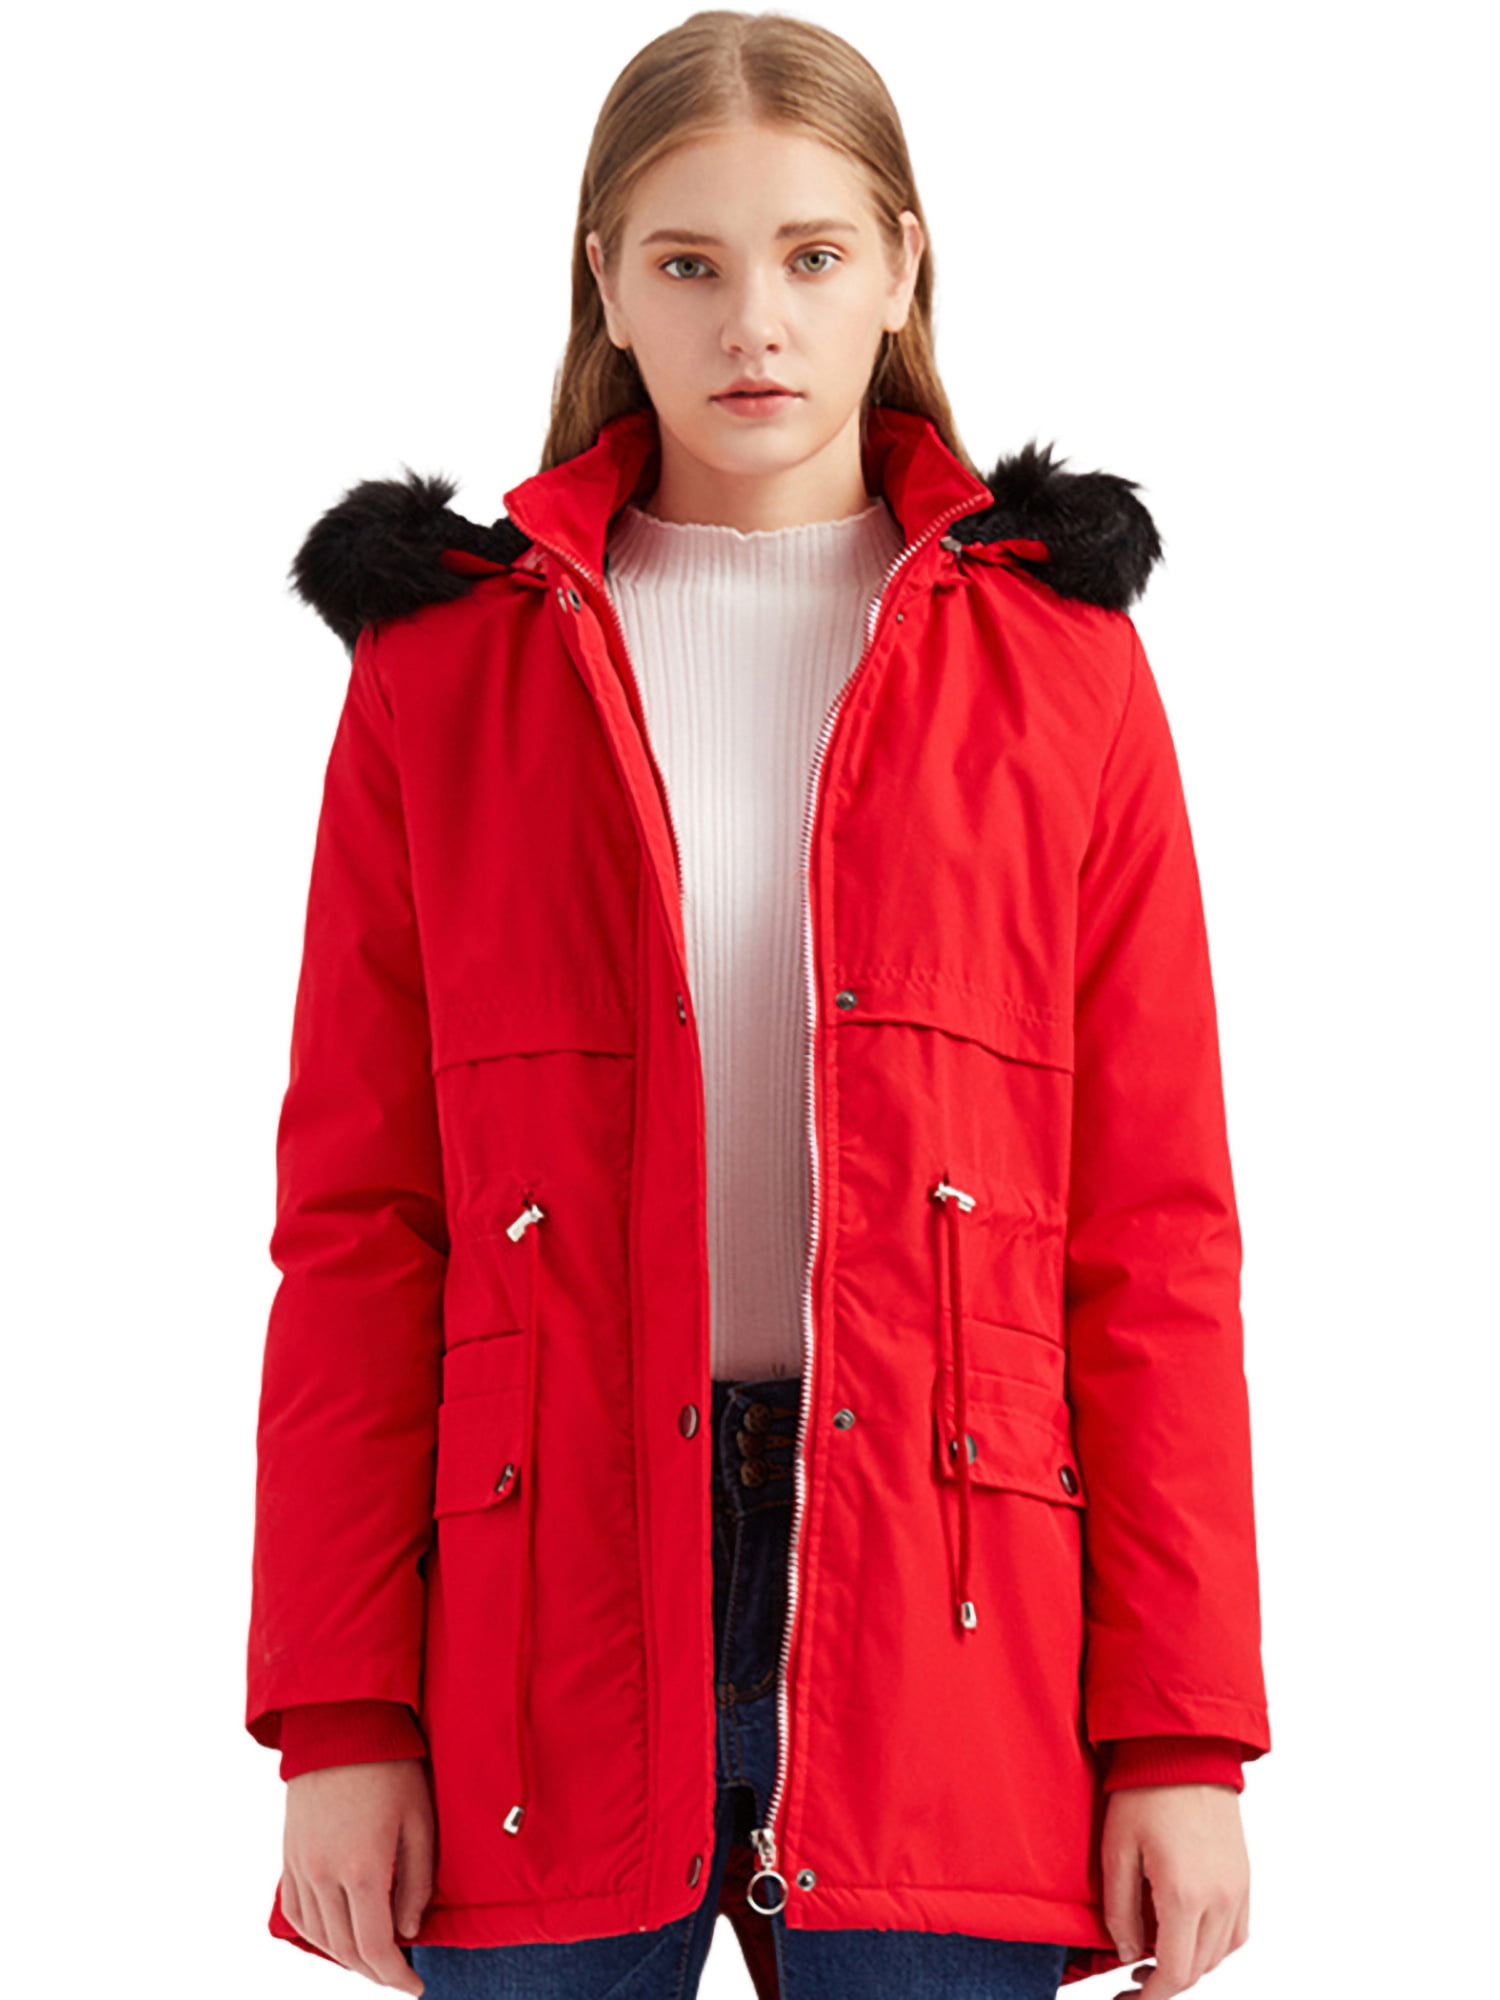 Womens Sherpa Lined Anorak Jacket Hooded Winter Warm Coat Tunic Thicken Outdoor Zip Up Teen Girls Pockets Outwear